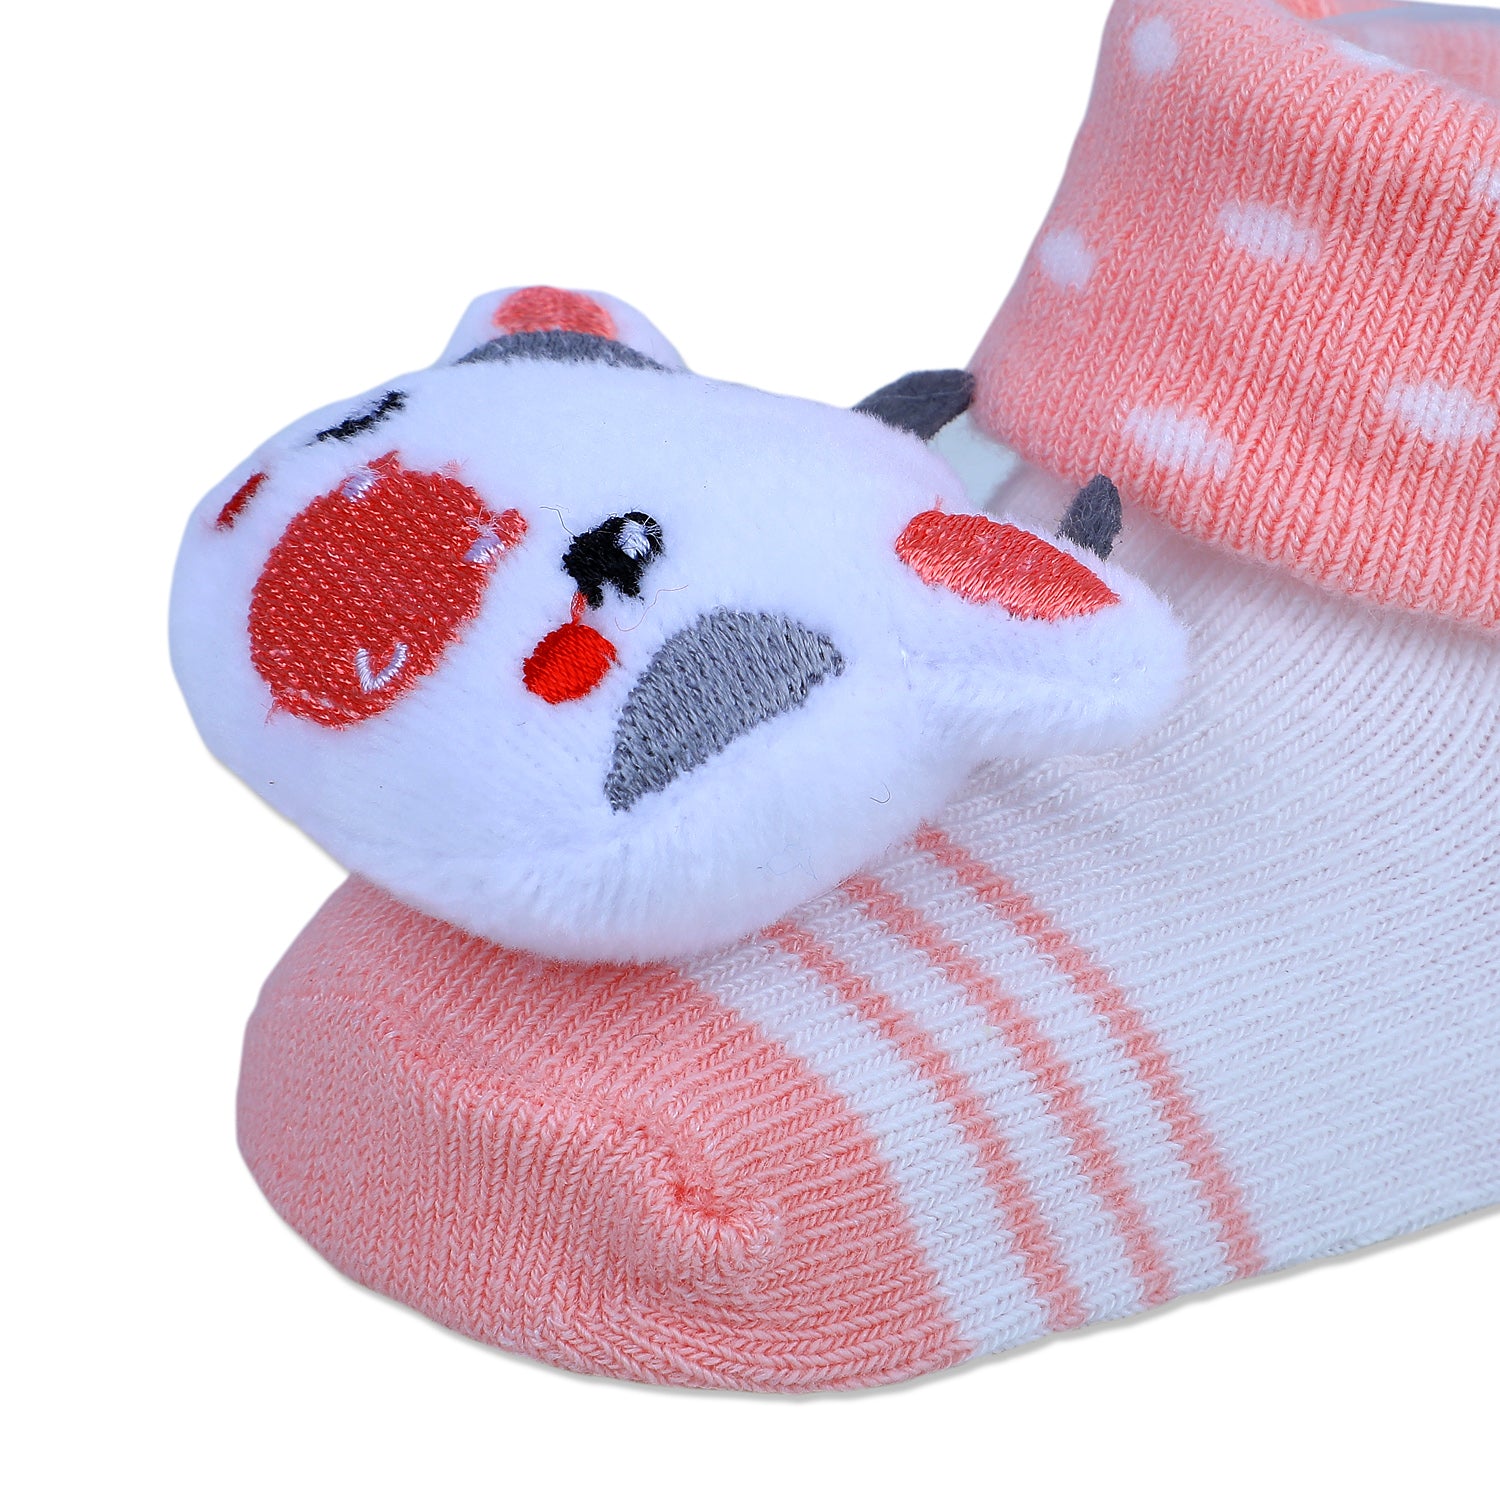 Baby Moo Cute Cow Cotton Anti-Skid 3D Socks - Peach - Baby Moo